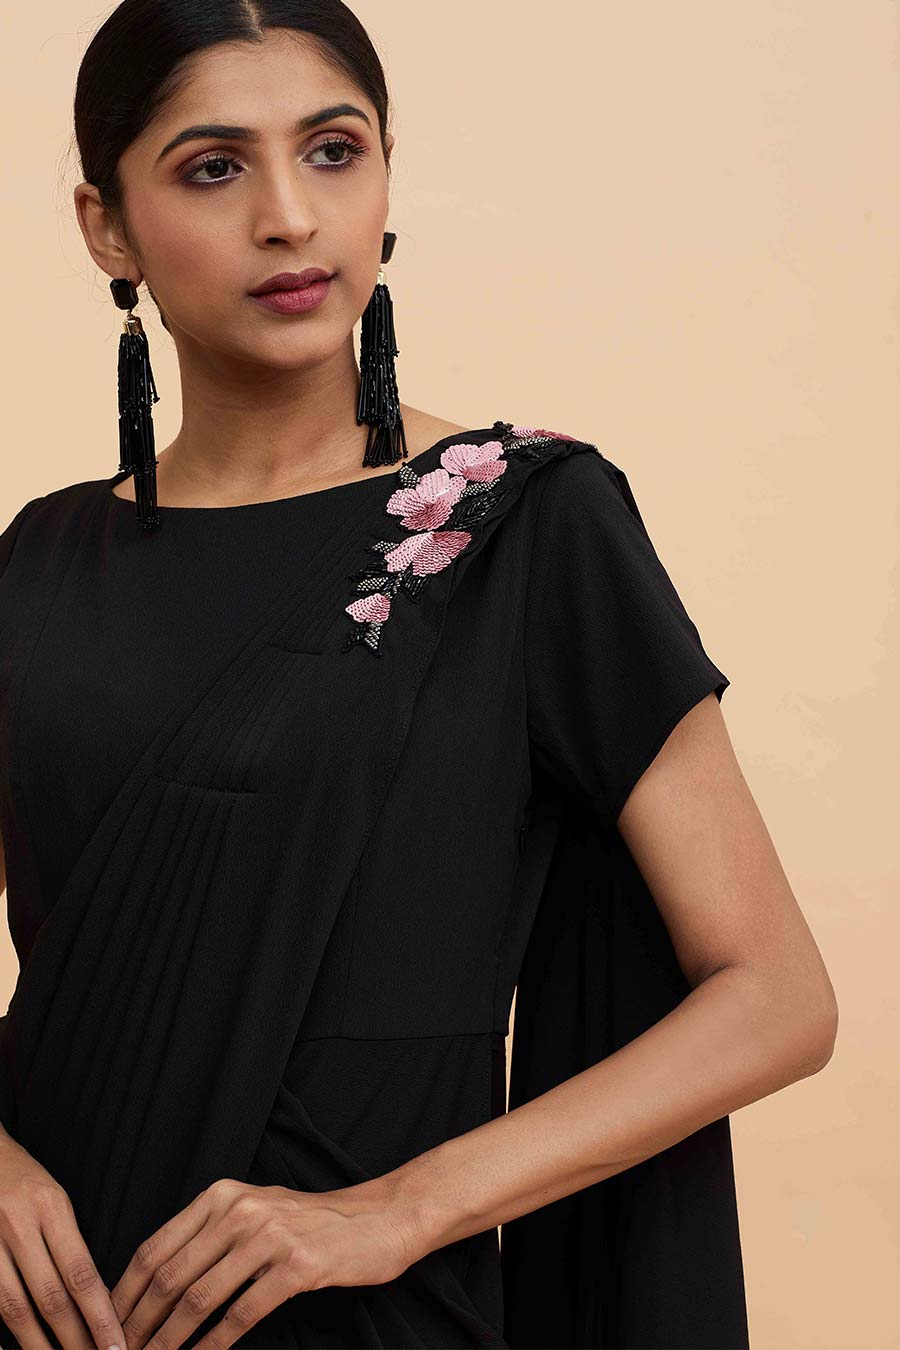 Black Cowl Drape Saree Dress